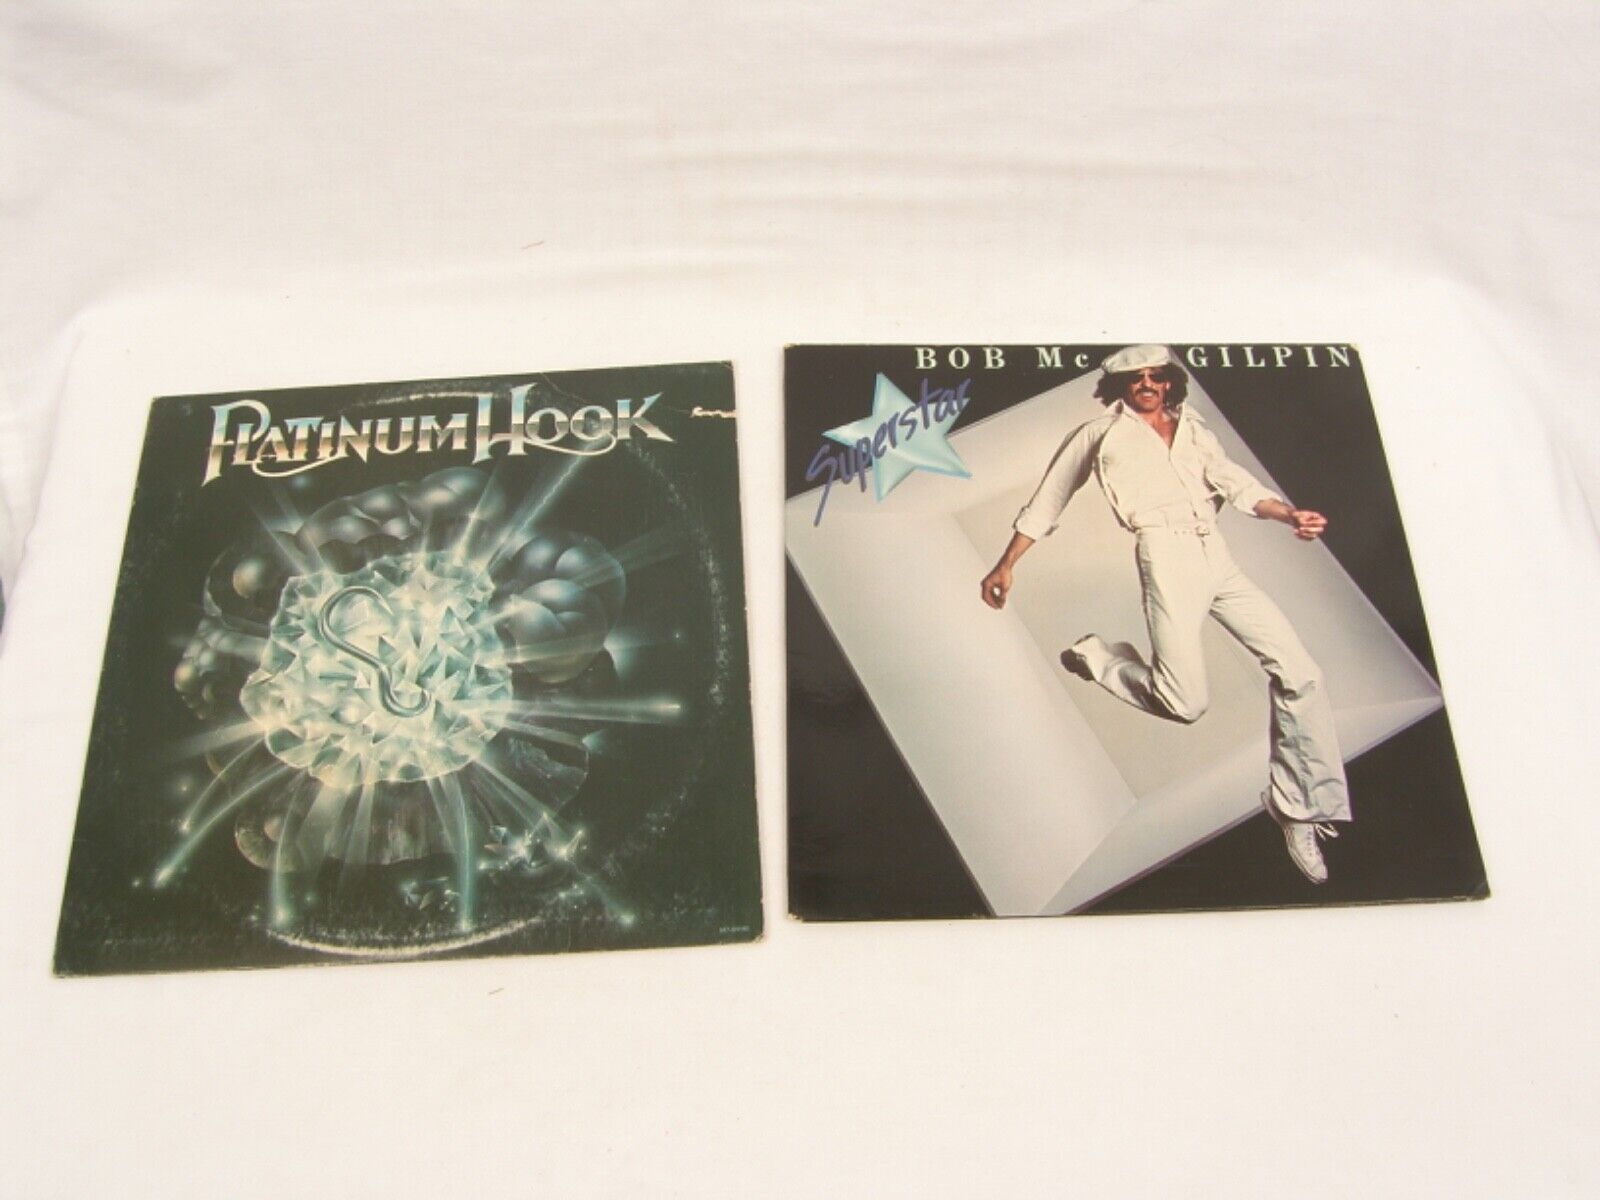 Vintage Lot of 2 Disco/Pop 1978 Record Album Vinyl LP Platinum Hook Bob McGilpin